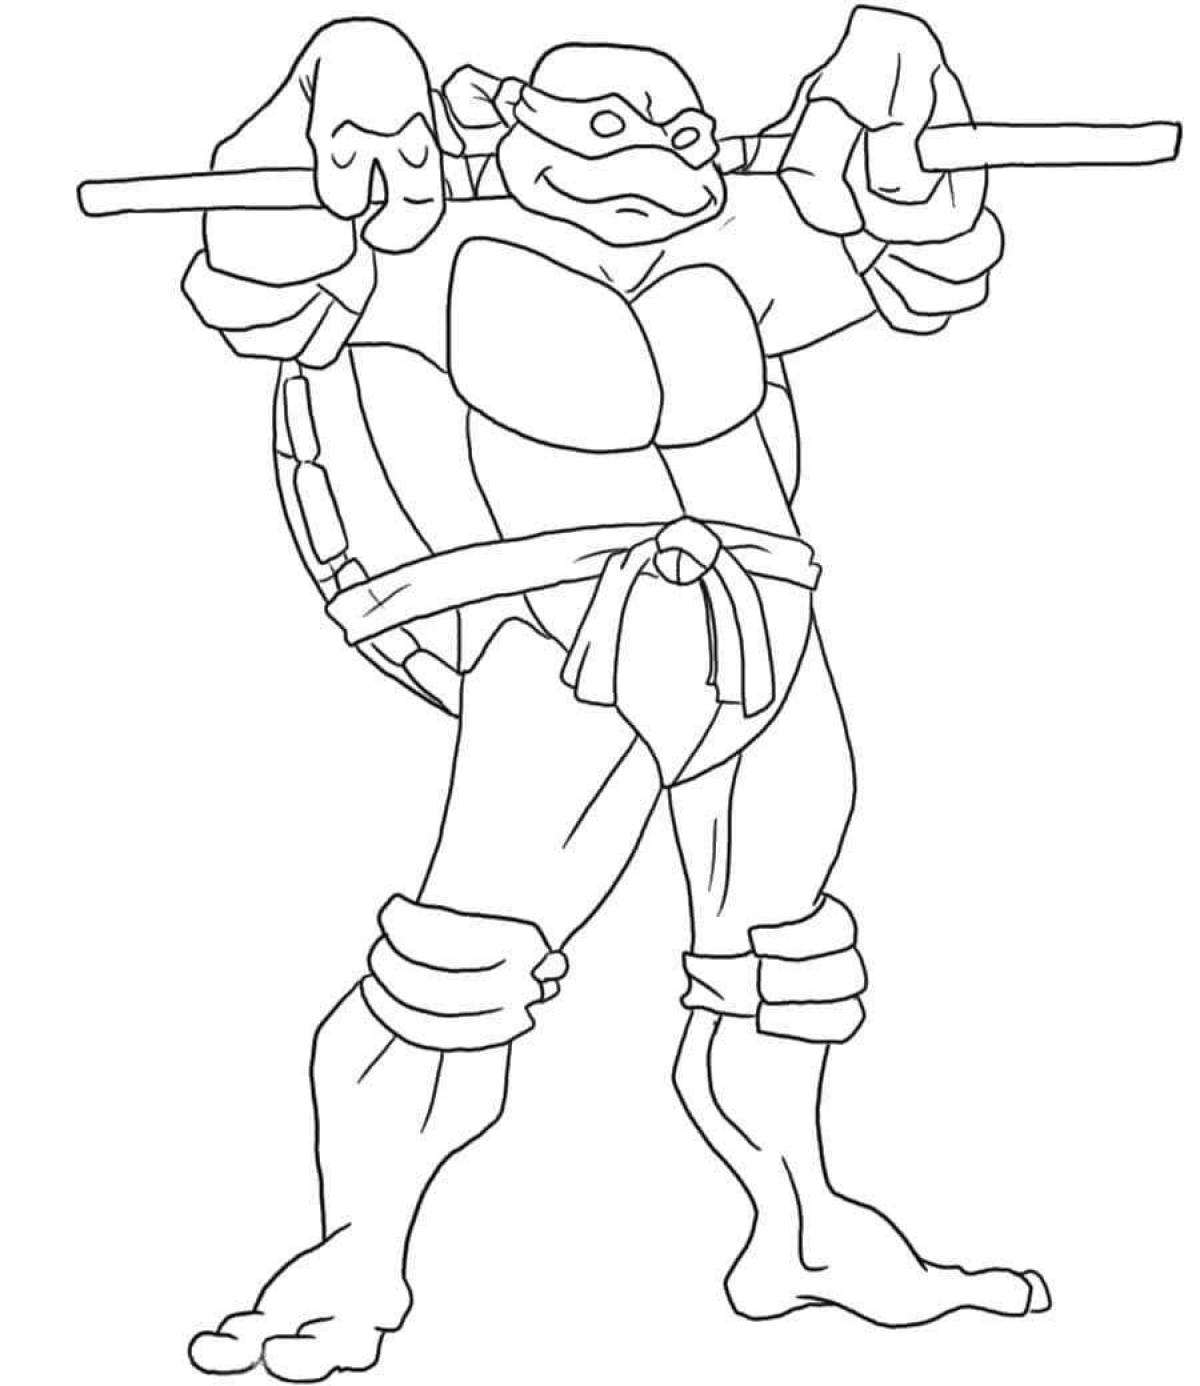 Michelangelo's adorable Teenage Mutant Ninja Turtles coloring book